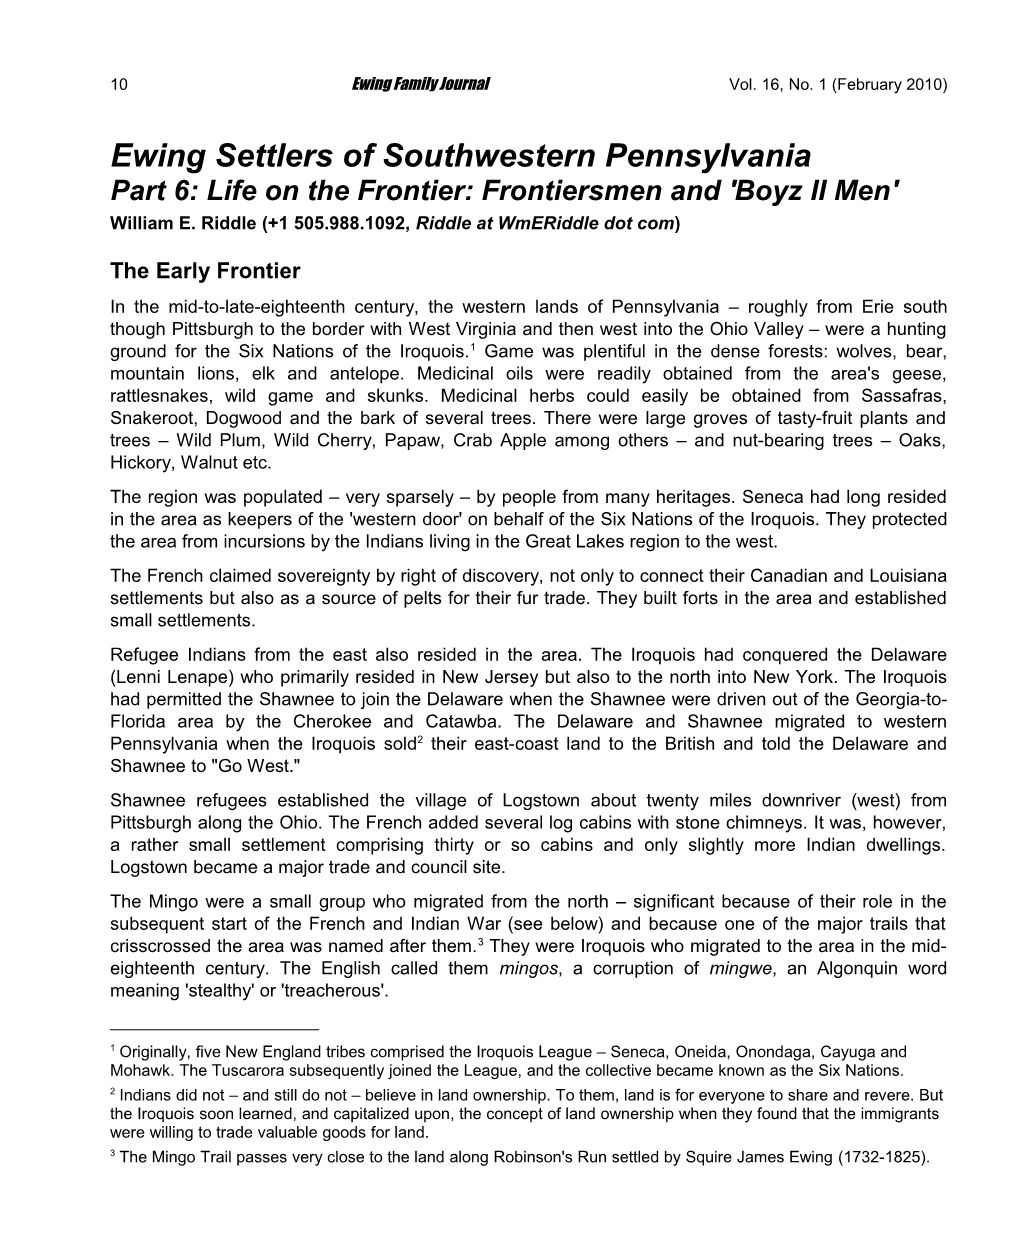 Ewing Settlers of Southwestern Pennsylvania